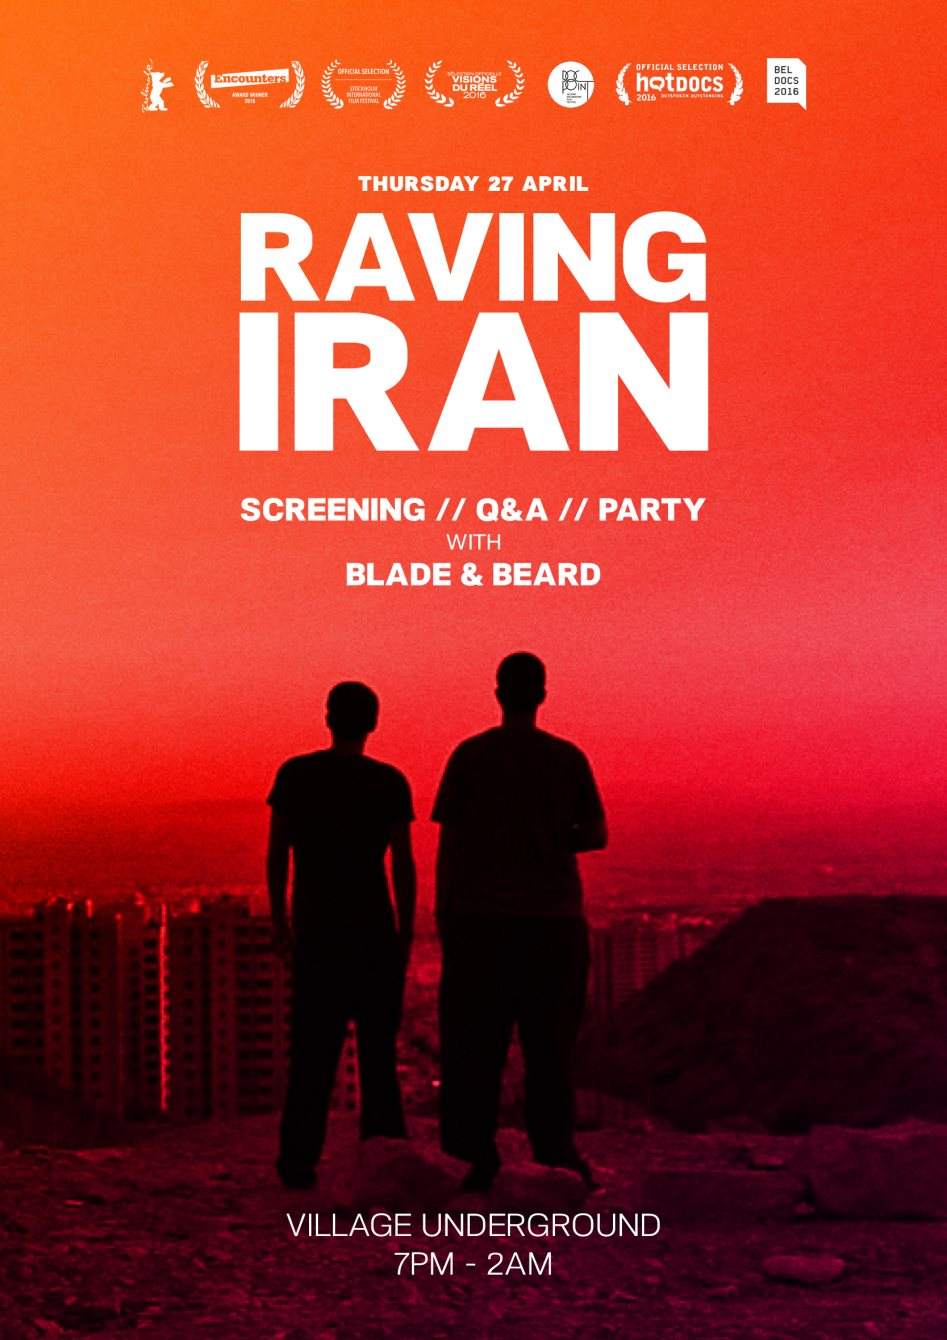 New documentary, Raving Iran, to screen at London's Village Underground image